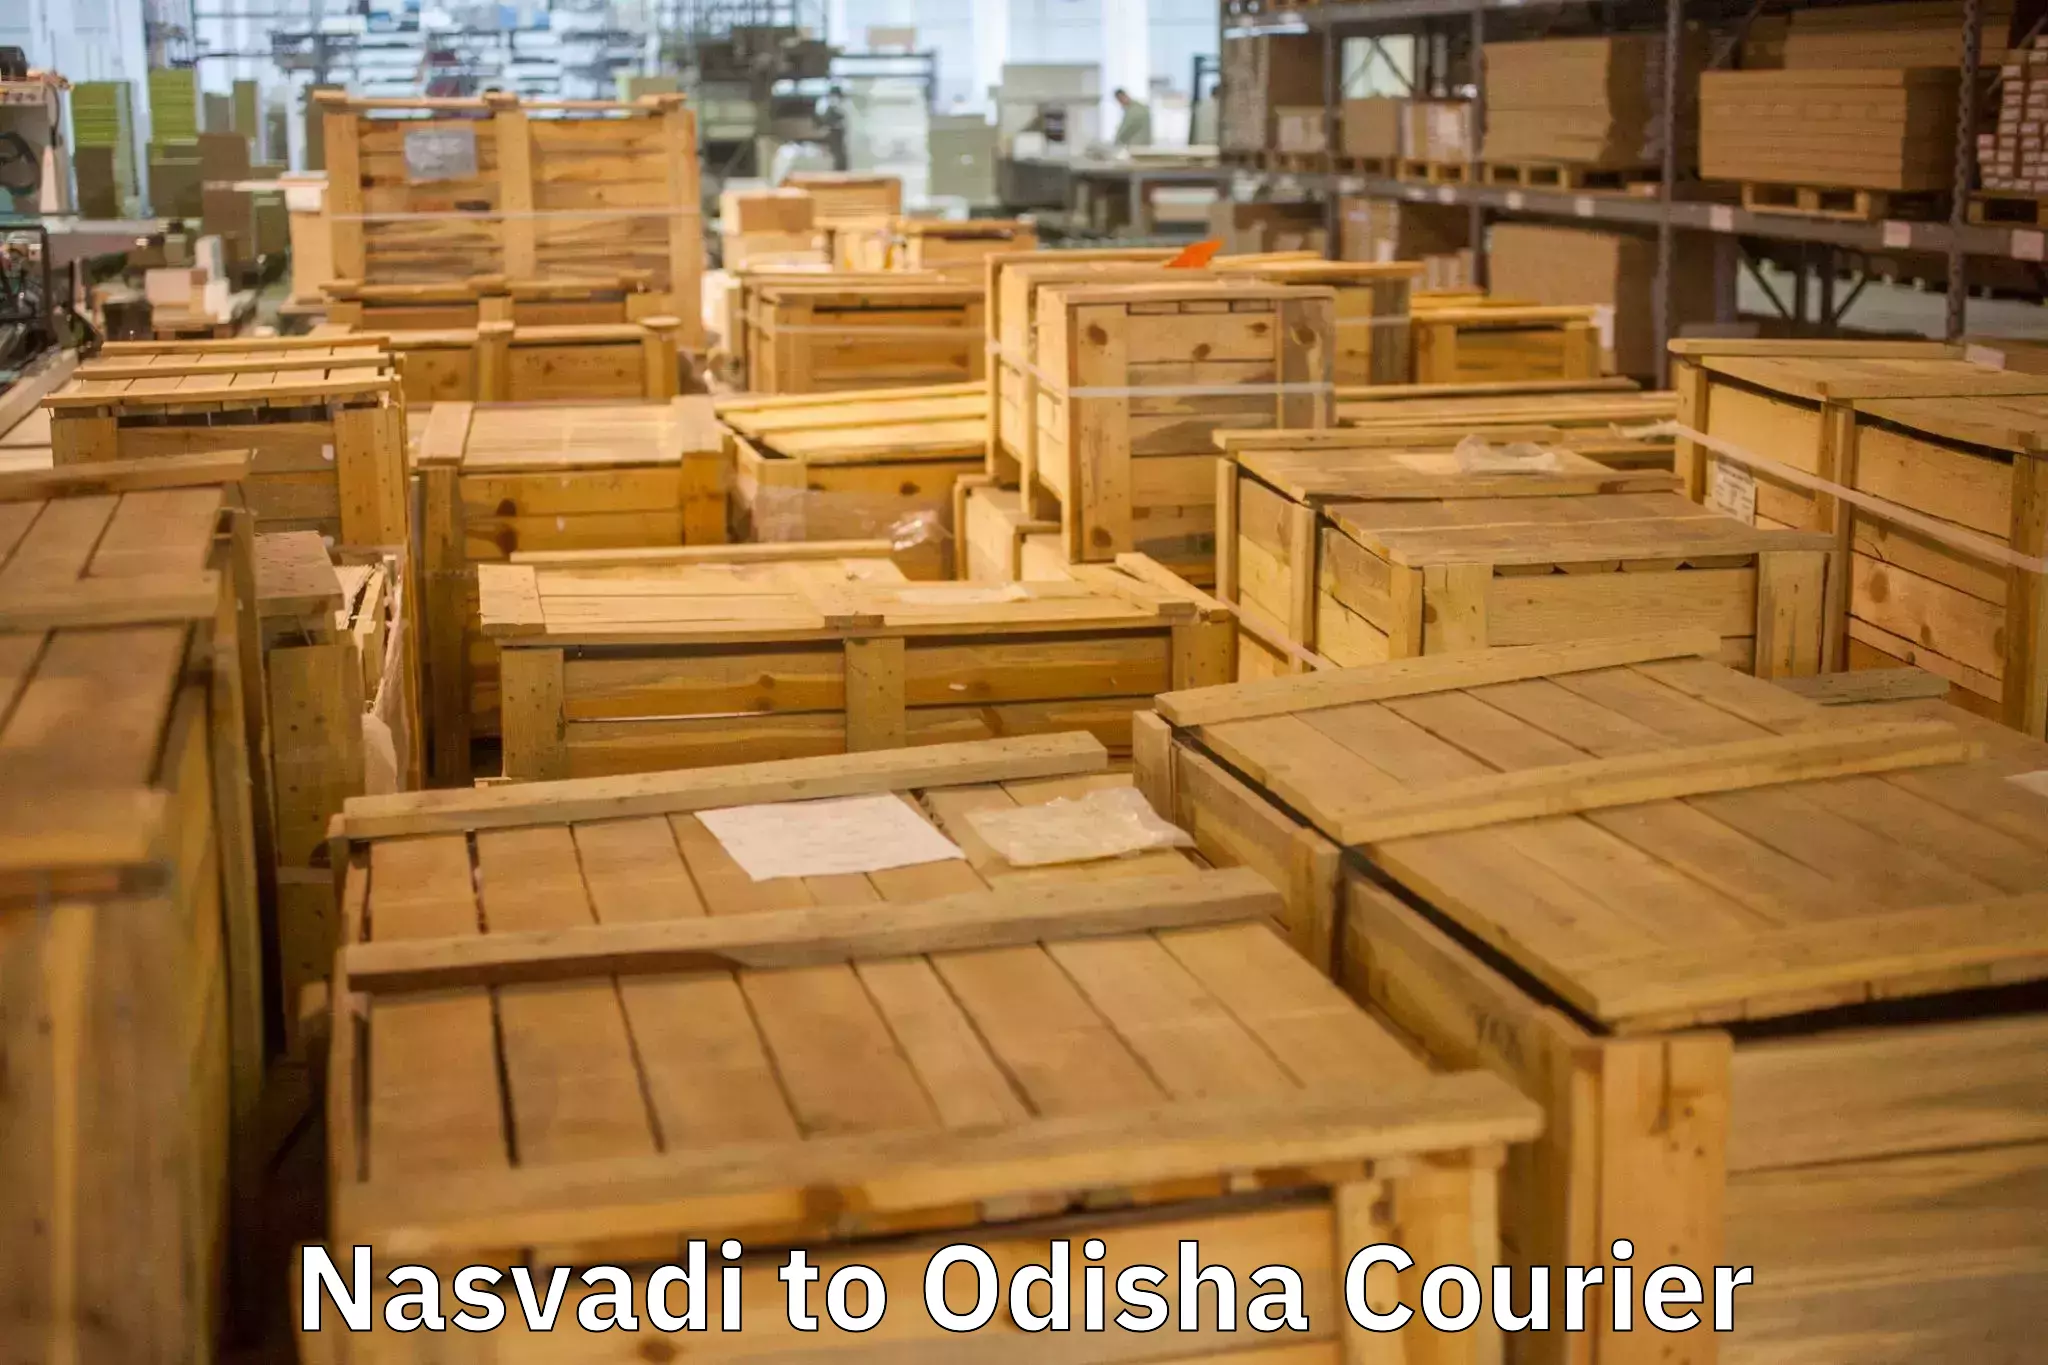 Furniture relocation experts Nasvadi to Asika